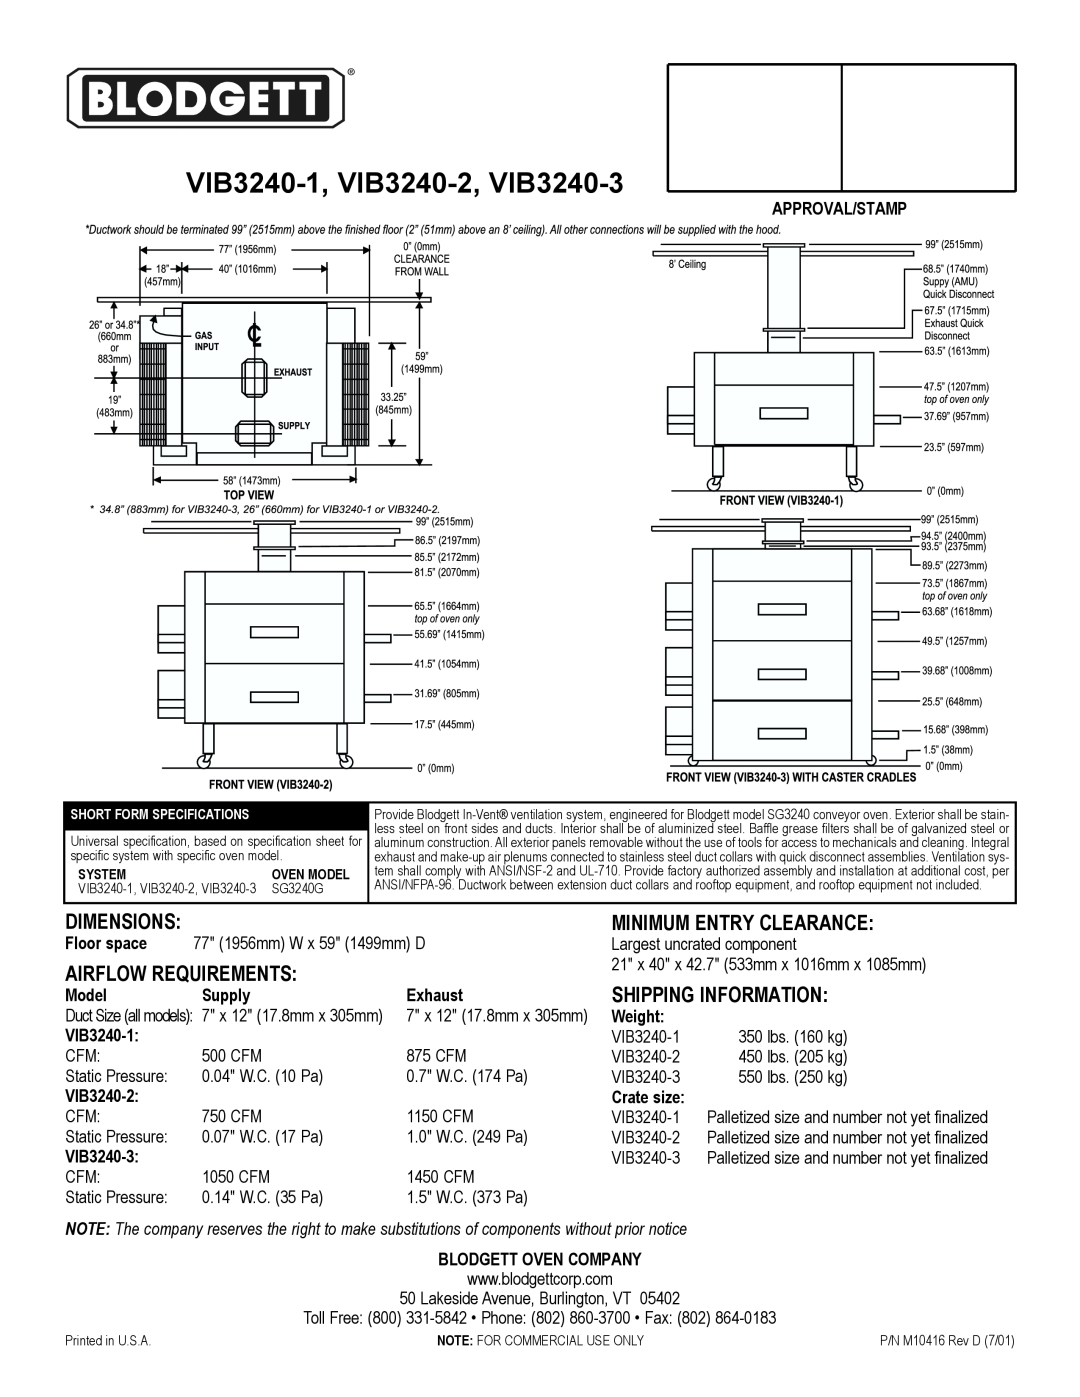 Blodgett VIB3240-1, VIB3240-2, VIB3240-3, Dimensions, Airflow Requirements, Minimum Entry Clearance, Approval/Stamp 